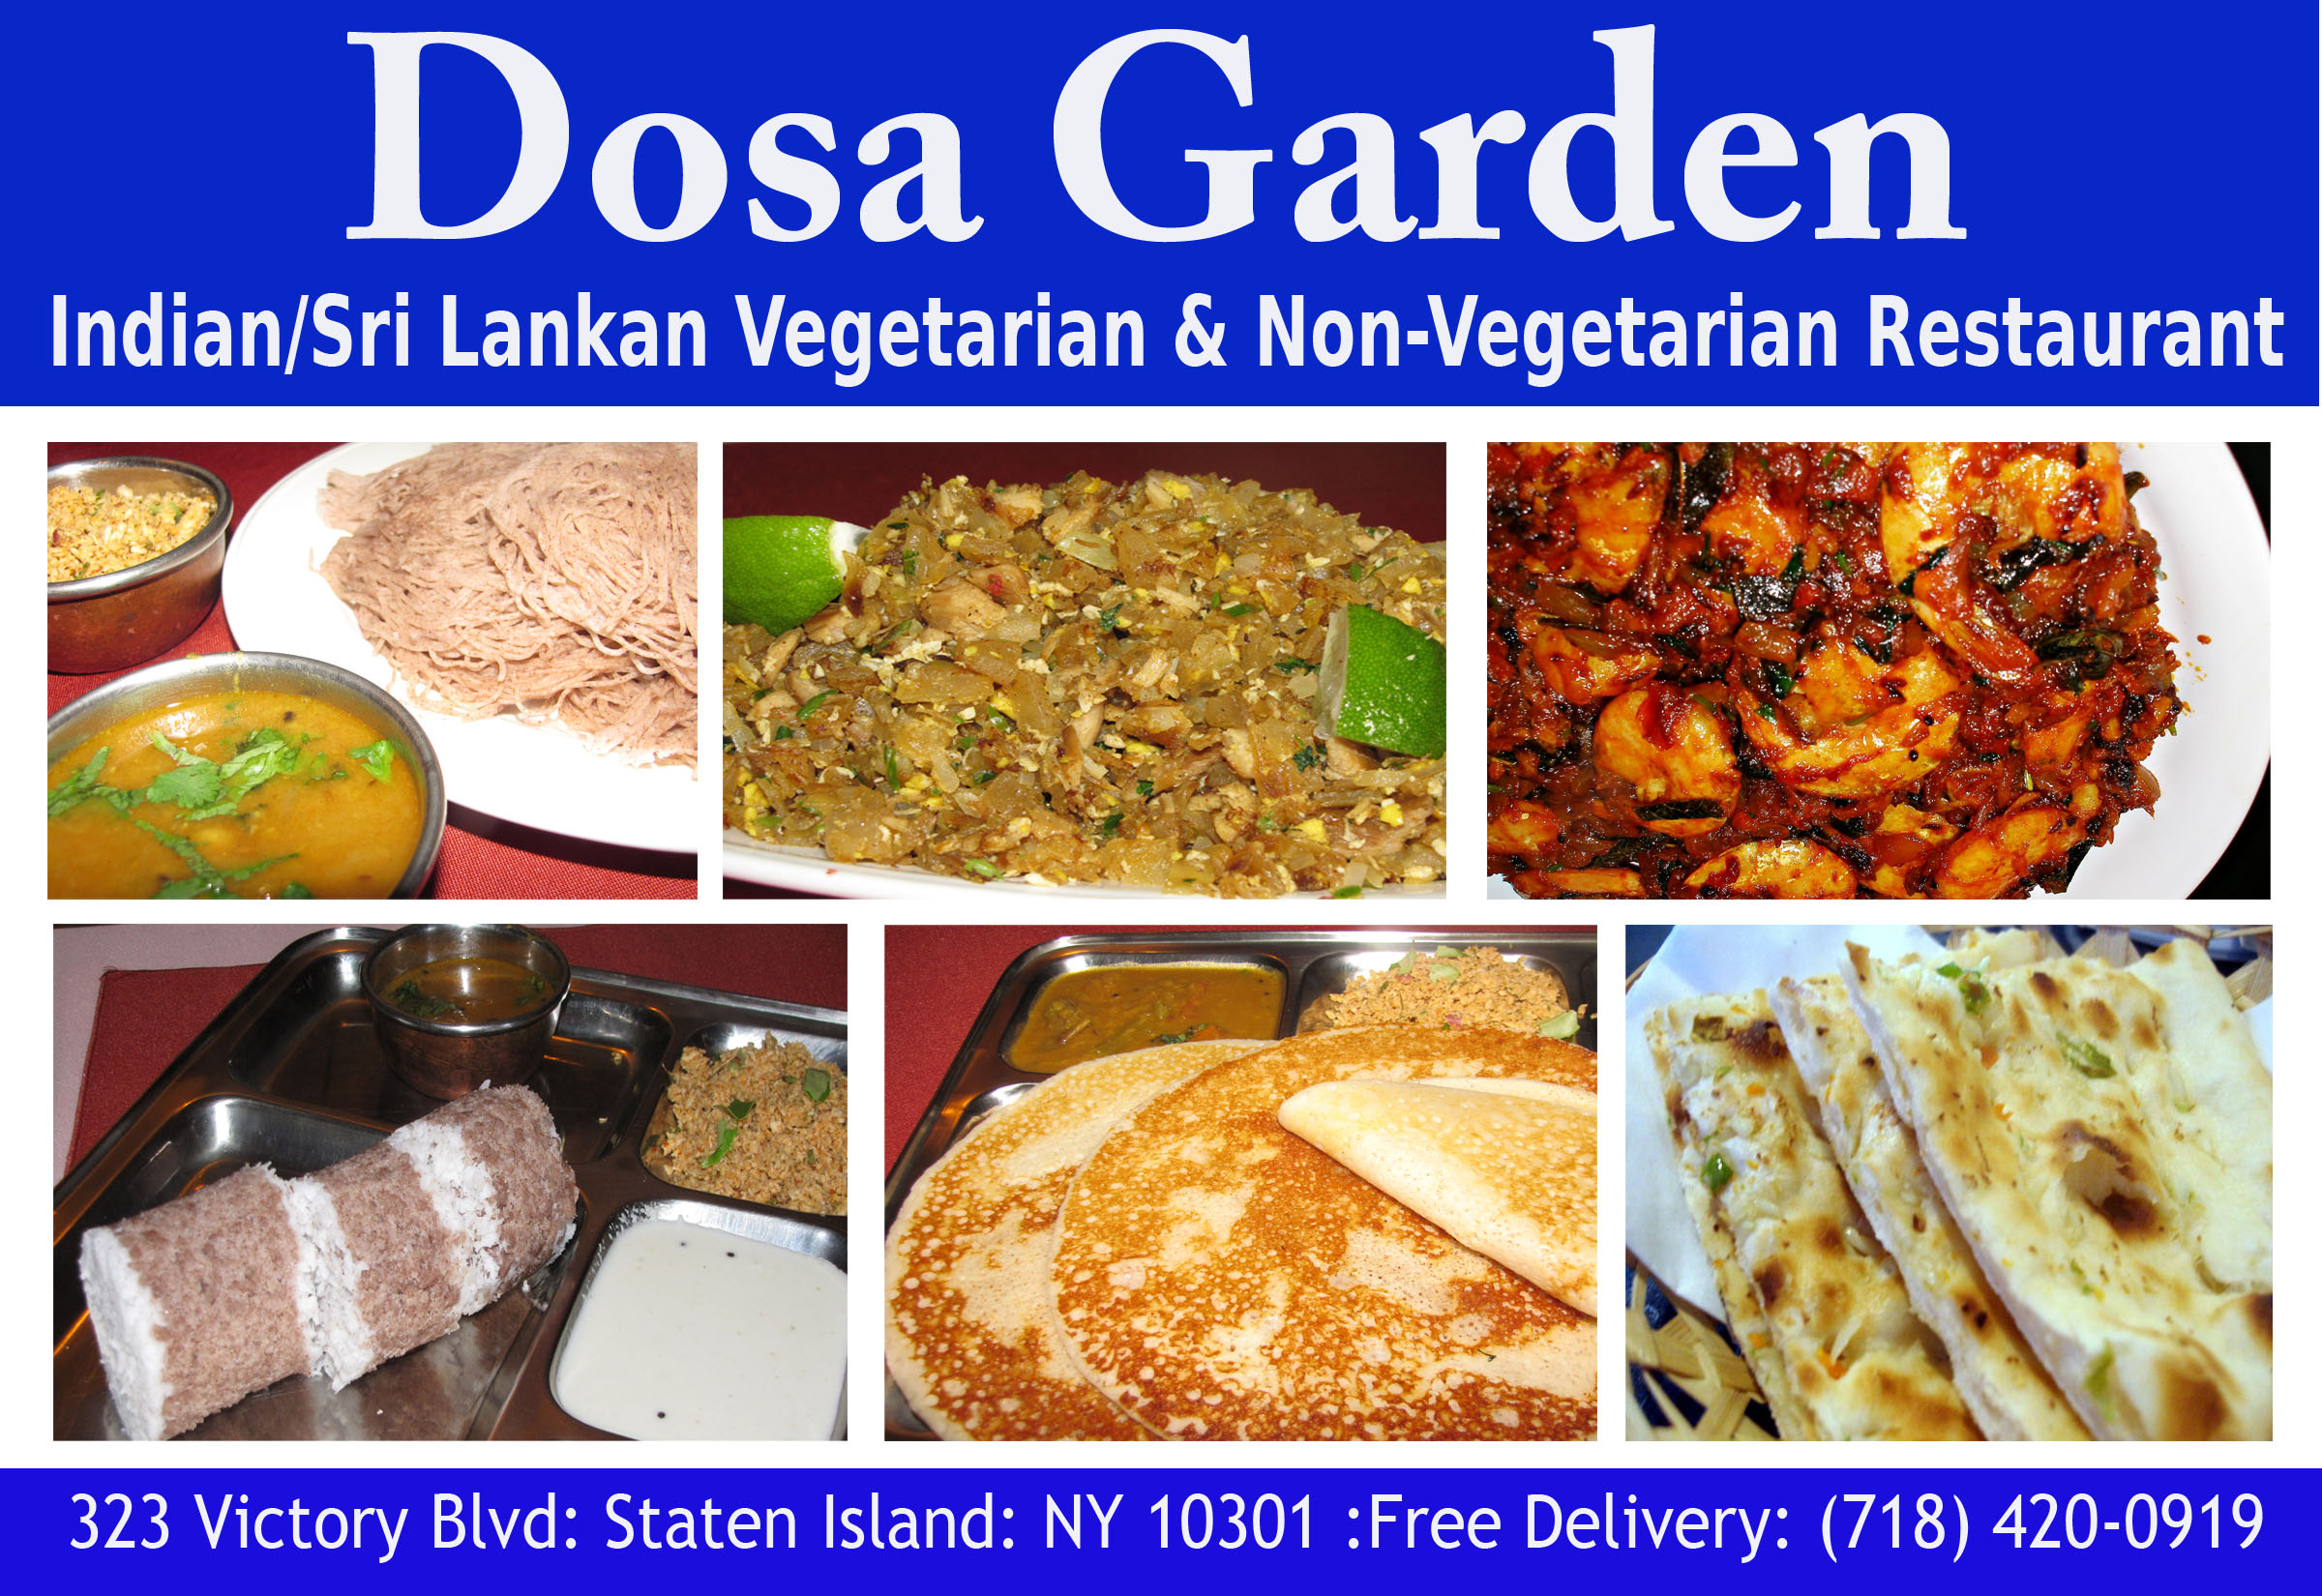 Staten Island’s Dosa Garden: A Huge ‘Dosa’ Flavor